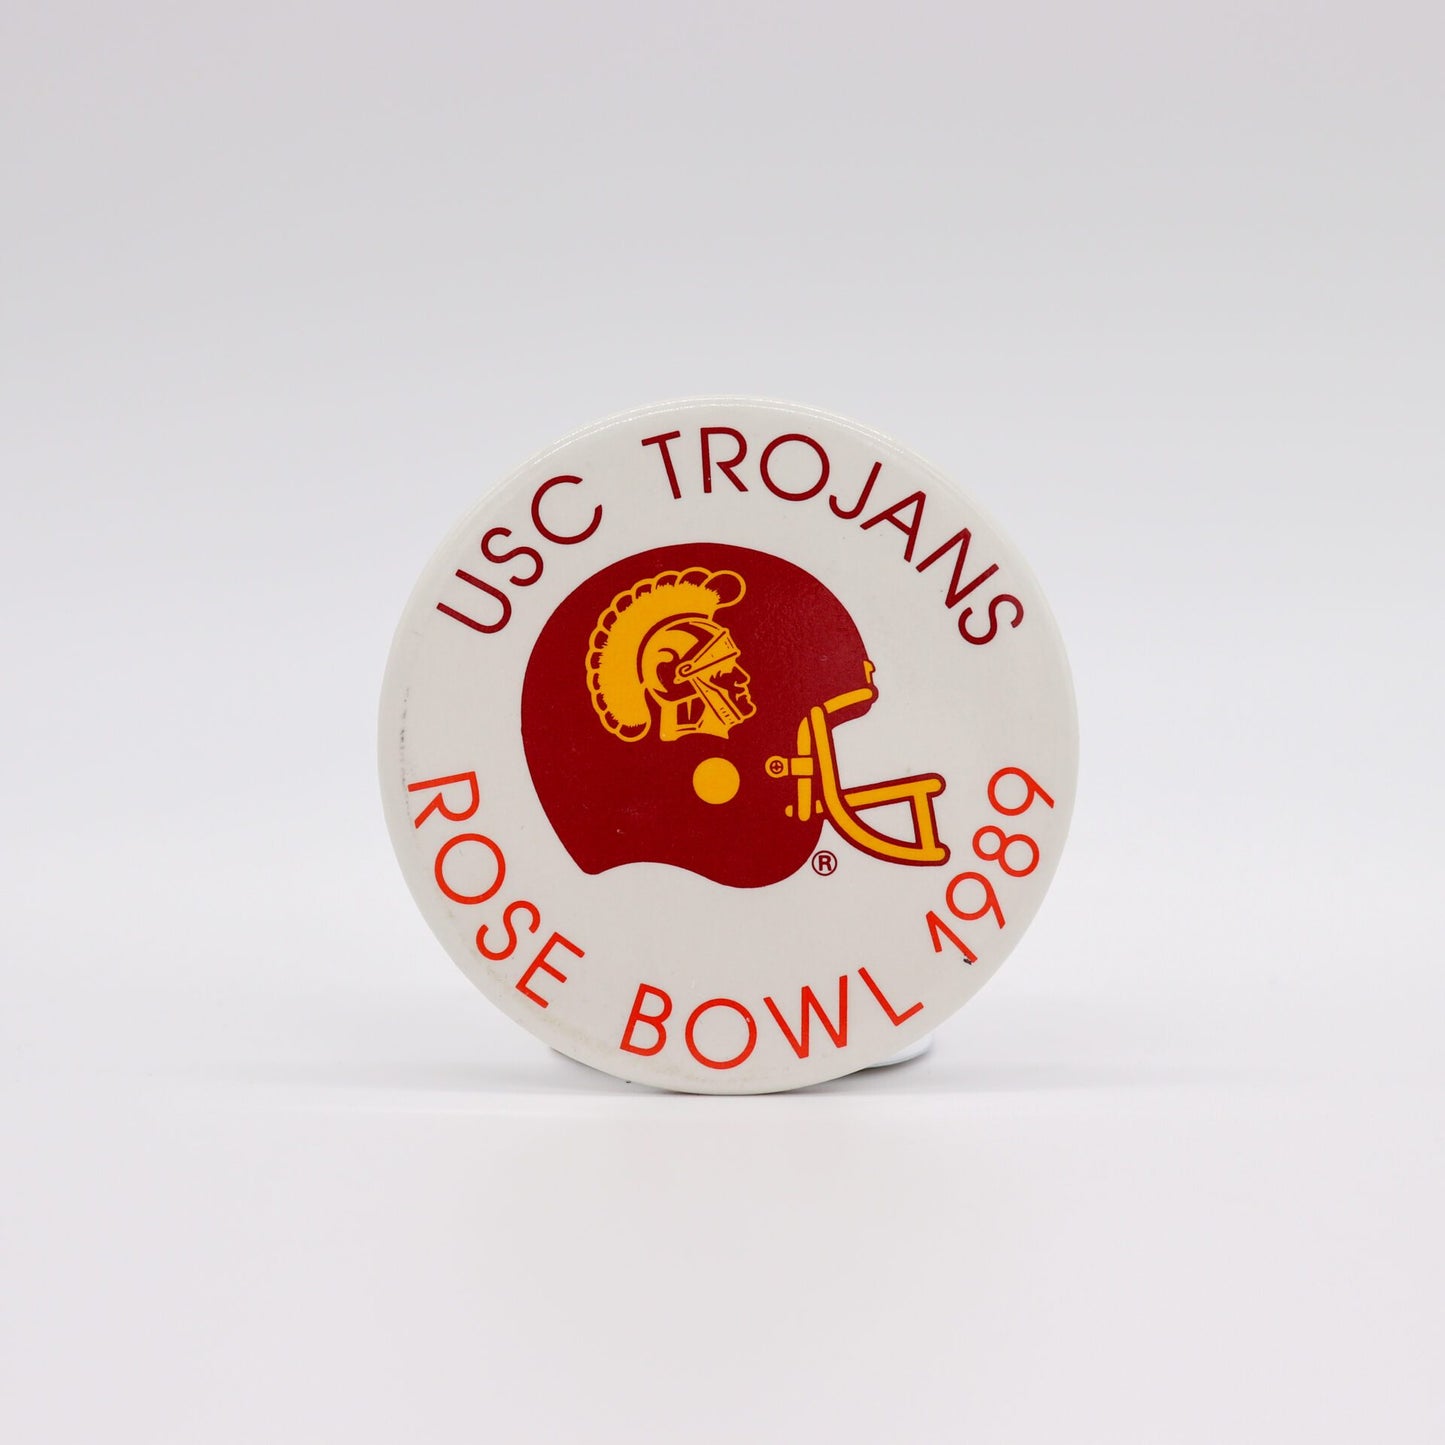 1989 USC Trojans Rose Bowl Pinback Button. Very Good/Near Mint